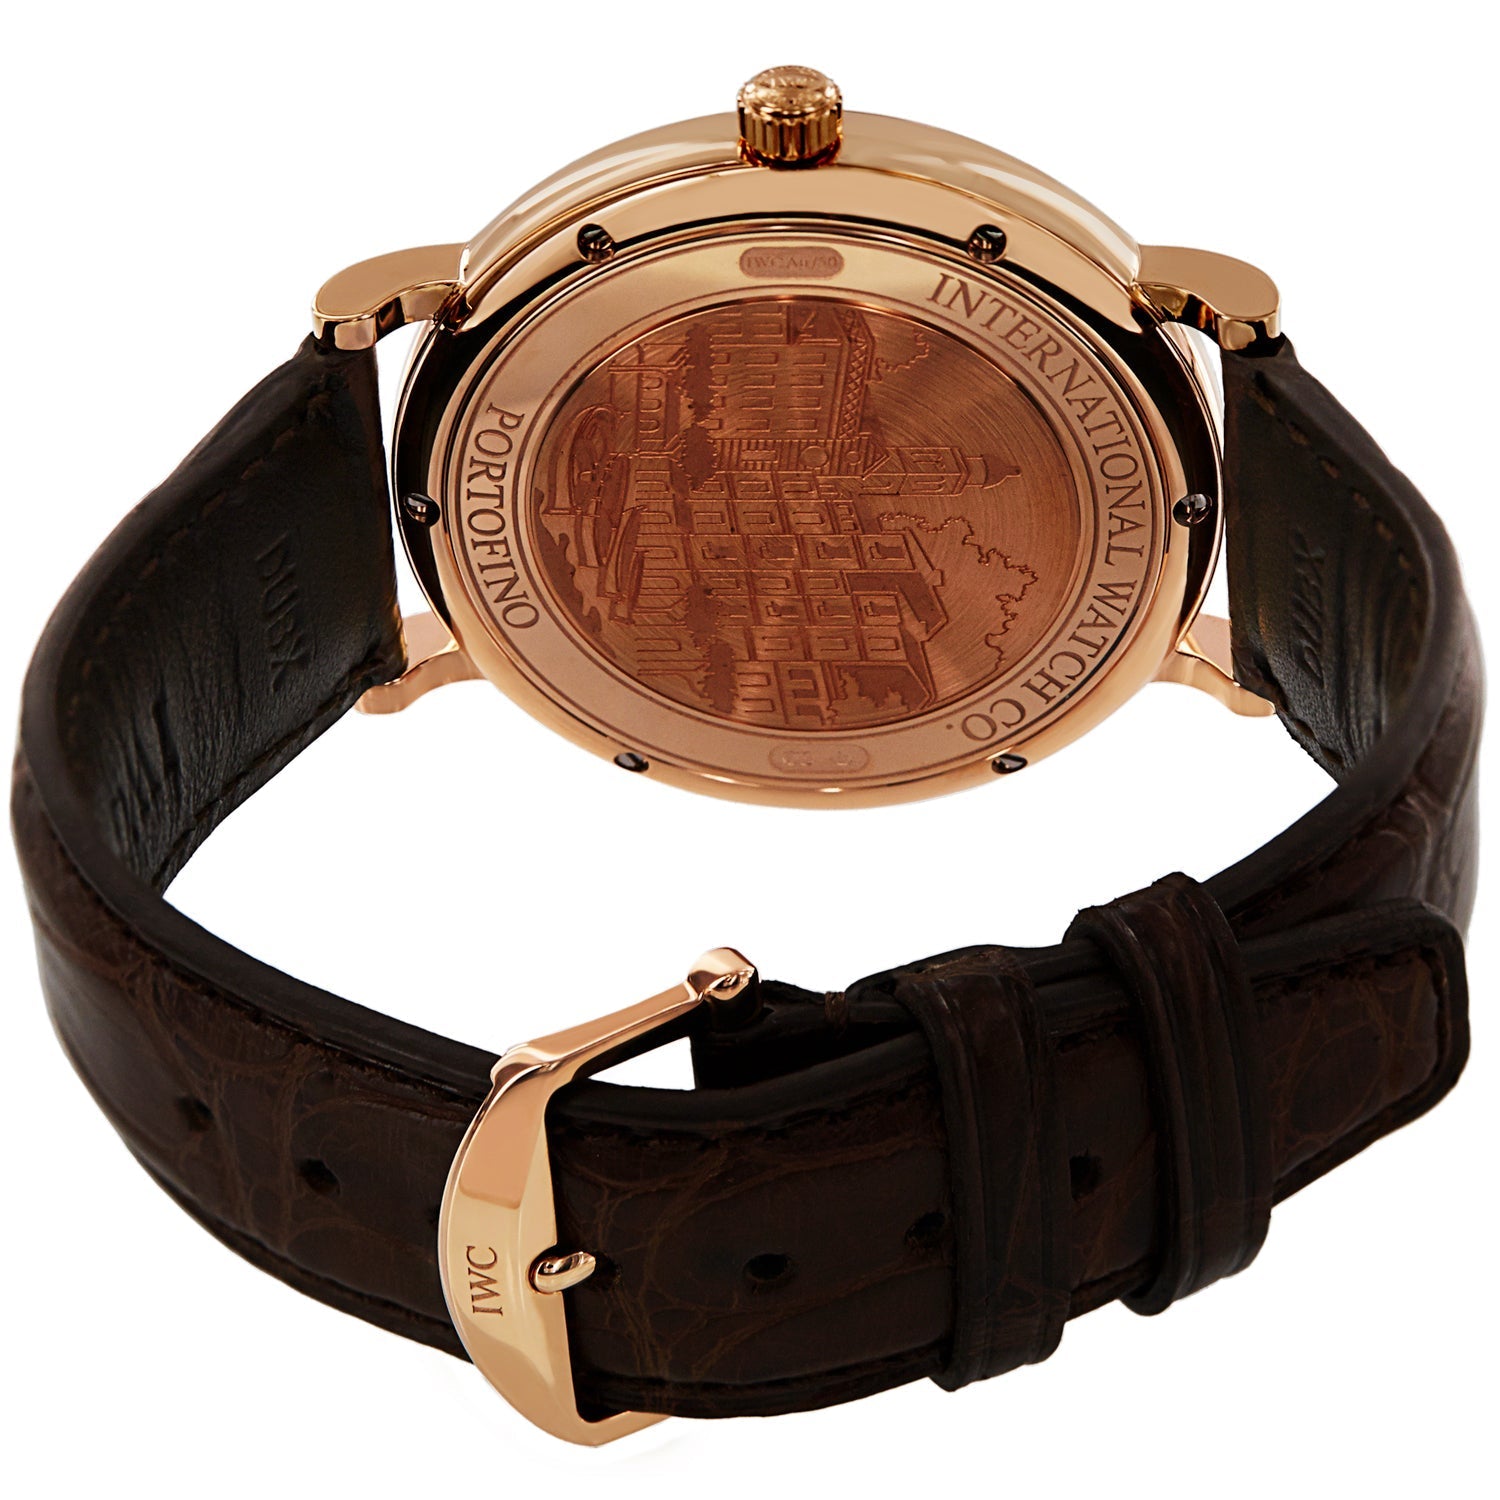 IWC Portofino Automatic White Dial Brown Leather Strap Watch for Men - IW356504